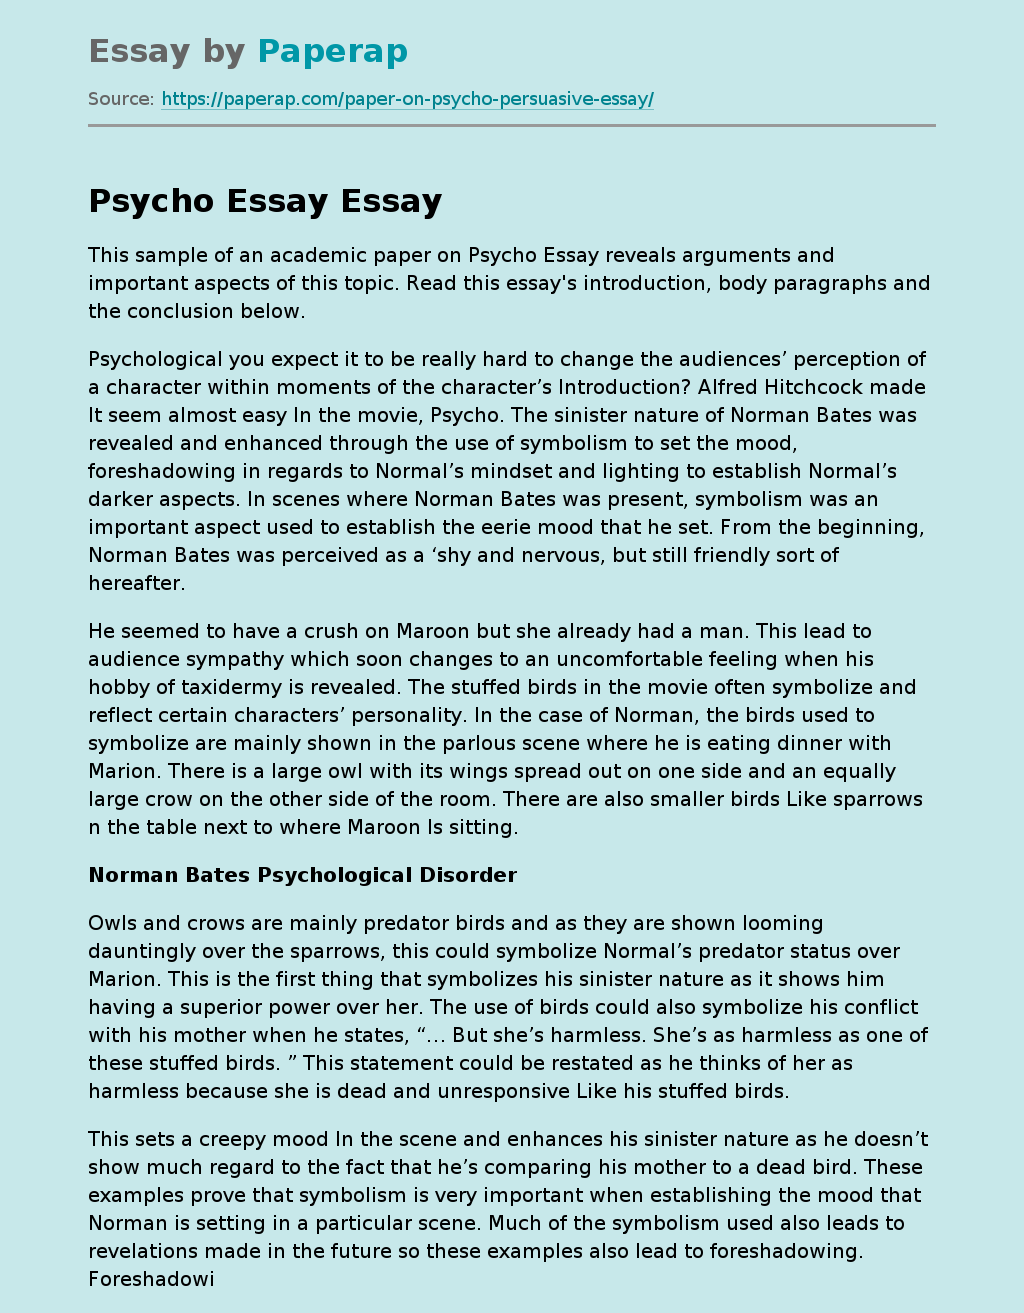 Psycho Essay